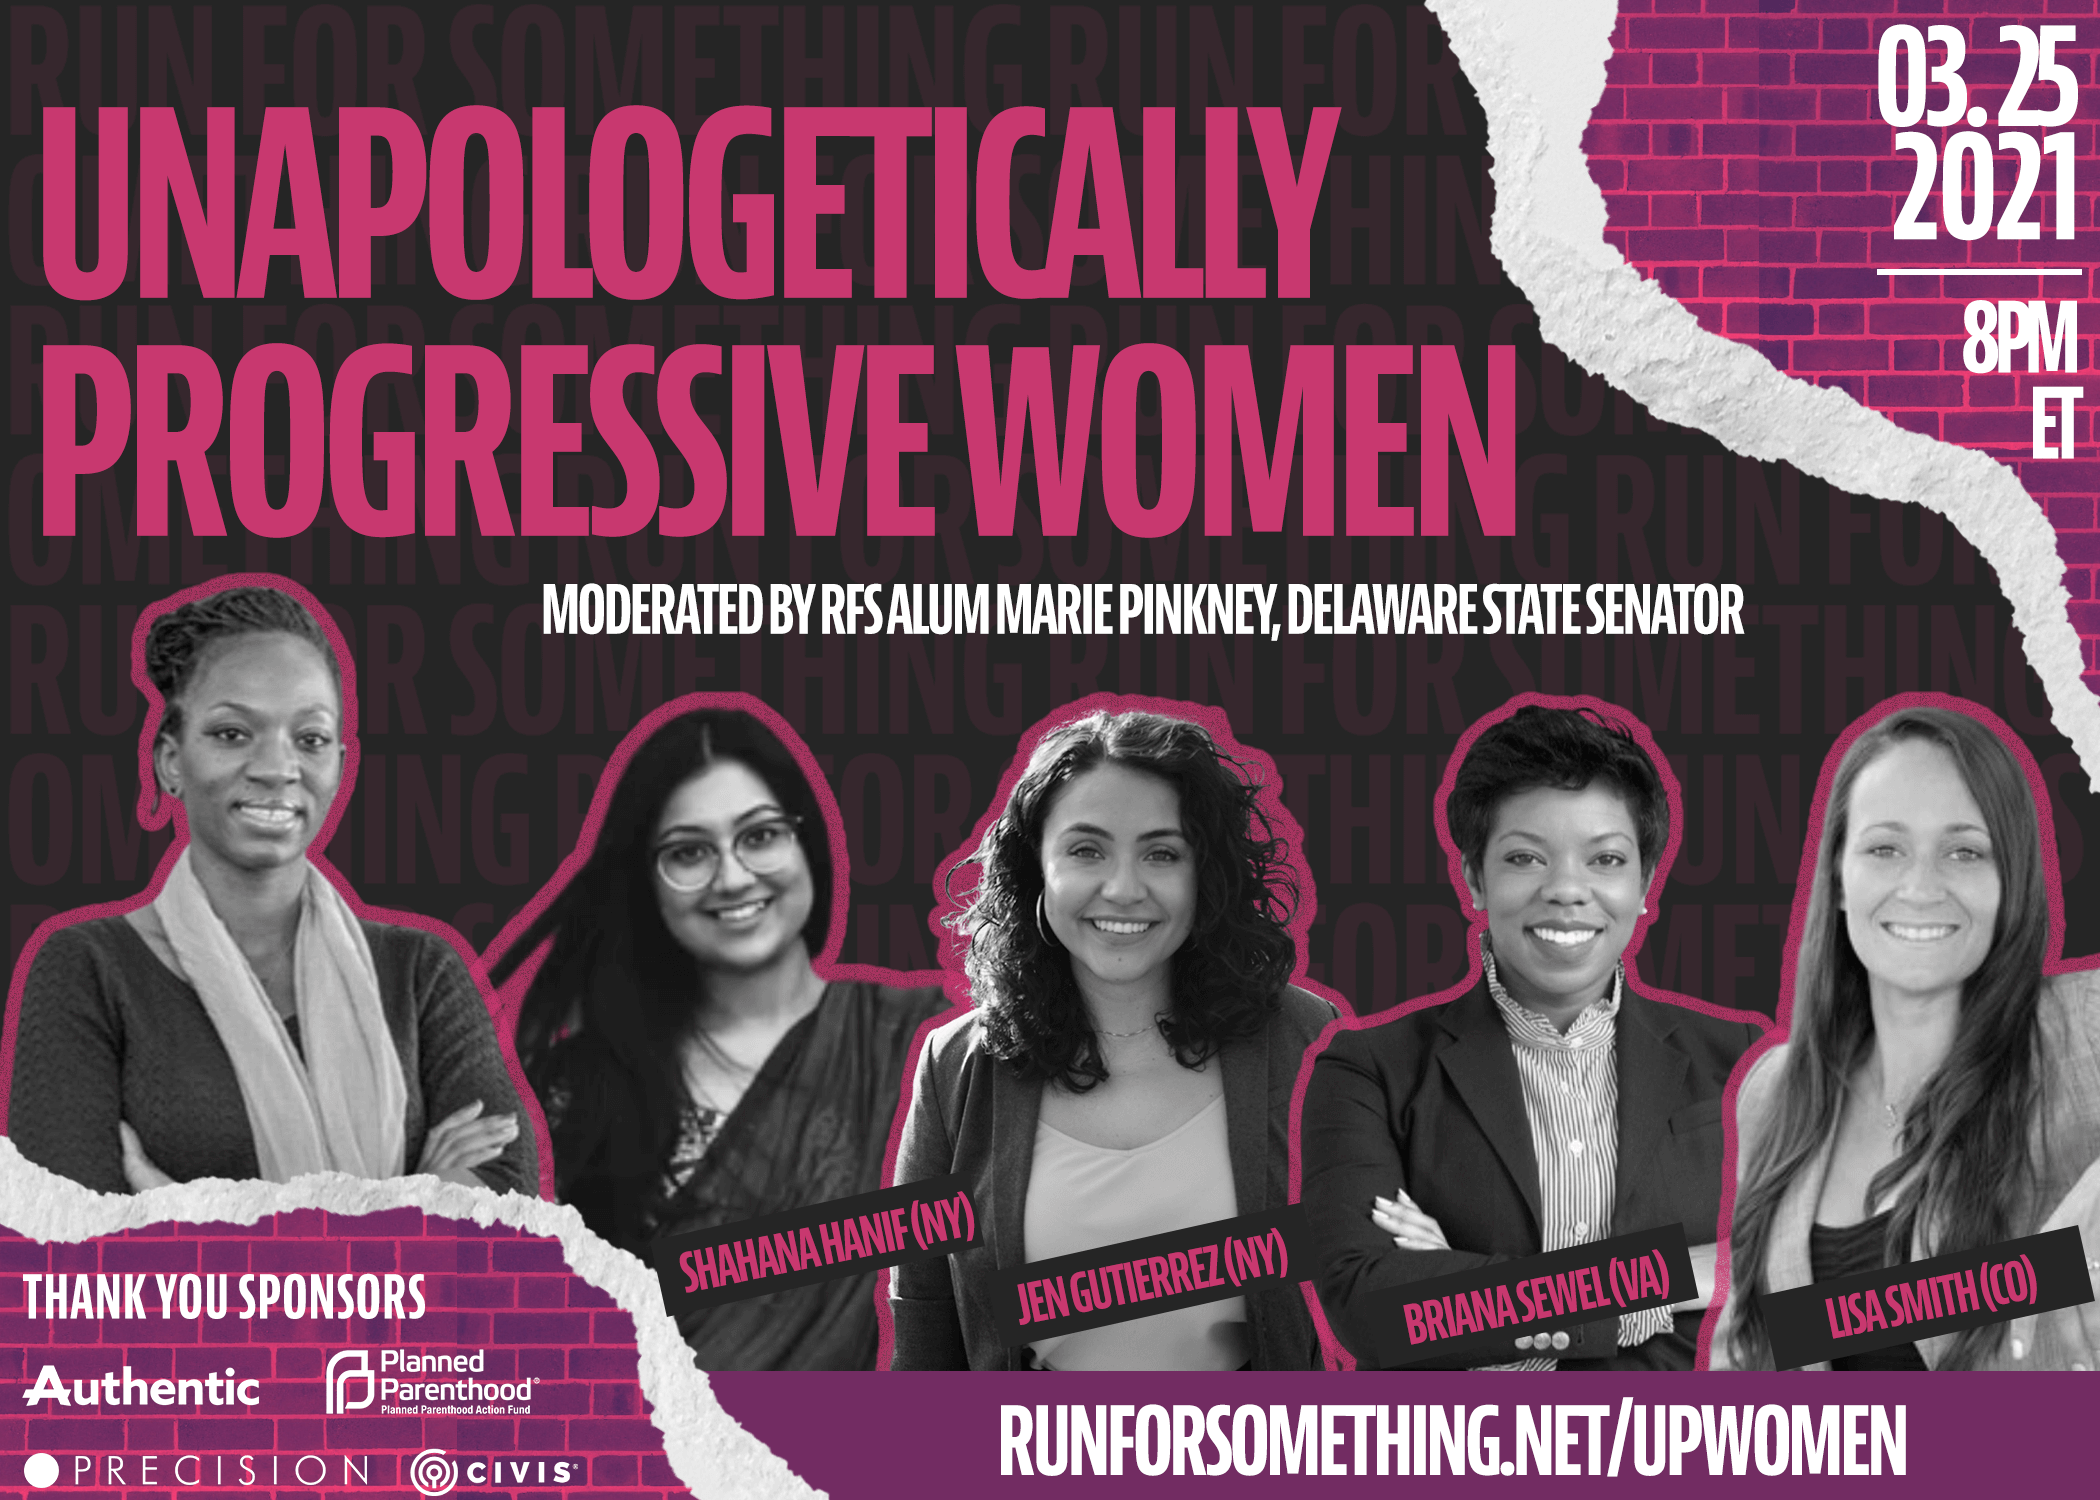 UNAPOLOGETICALLY PROGRESSIVE WOMEN || 03/25/2021 at 8:00 p.m. ET